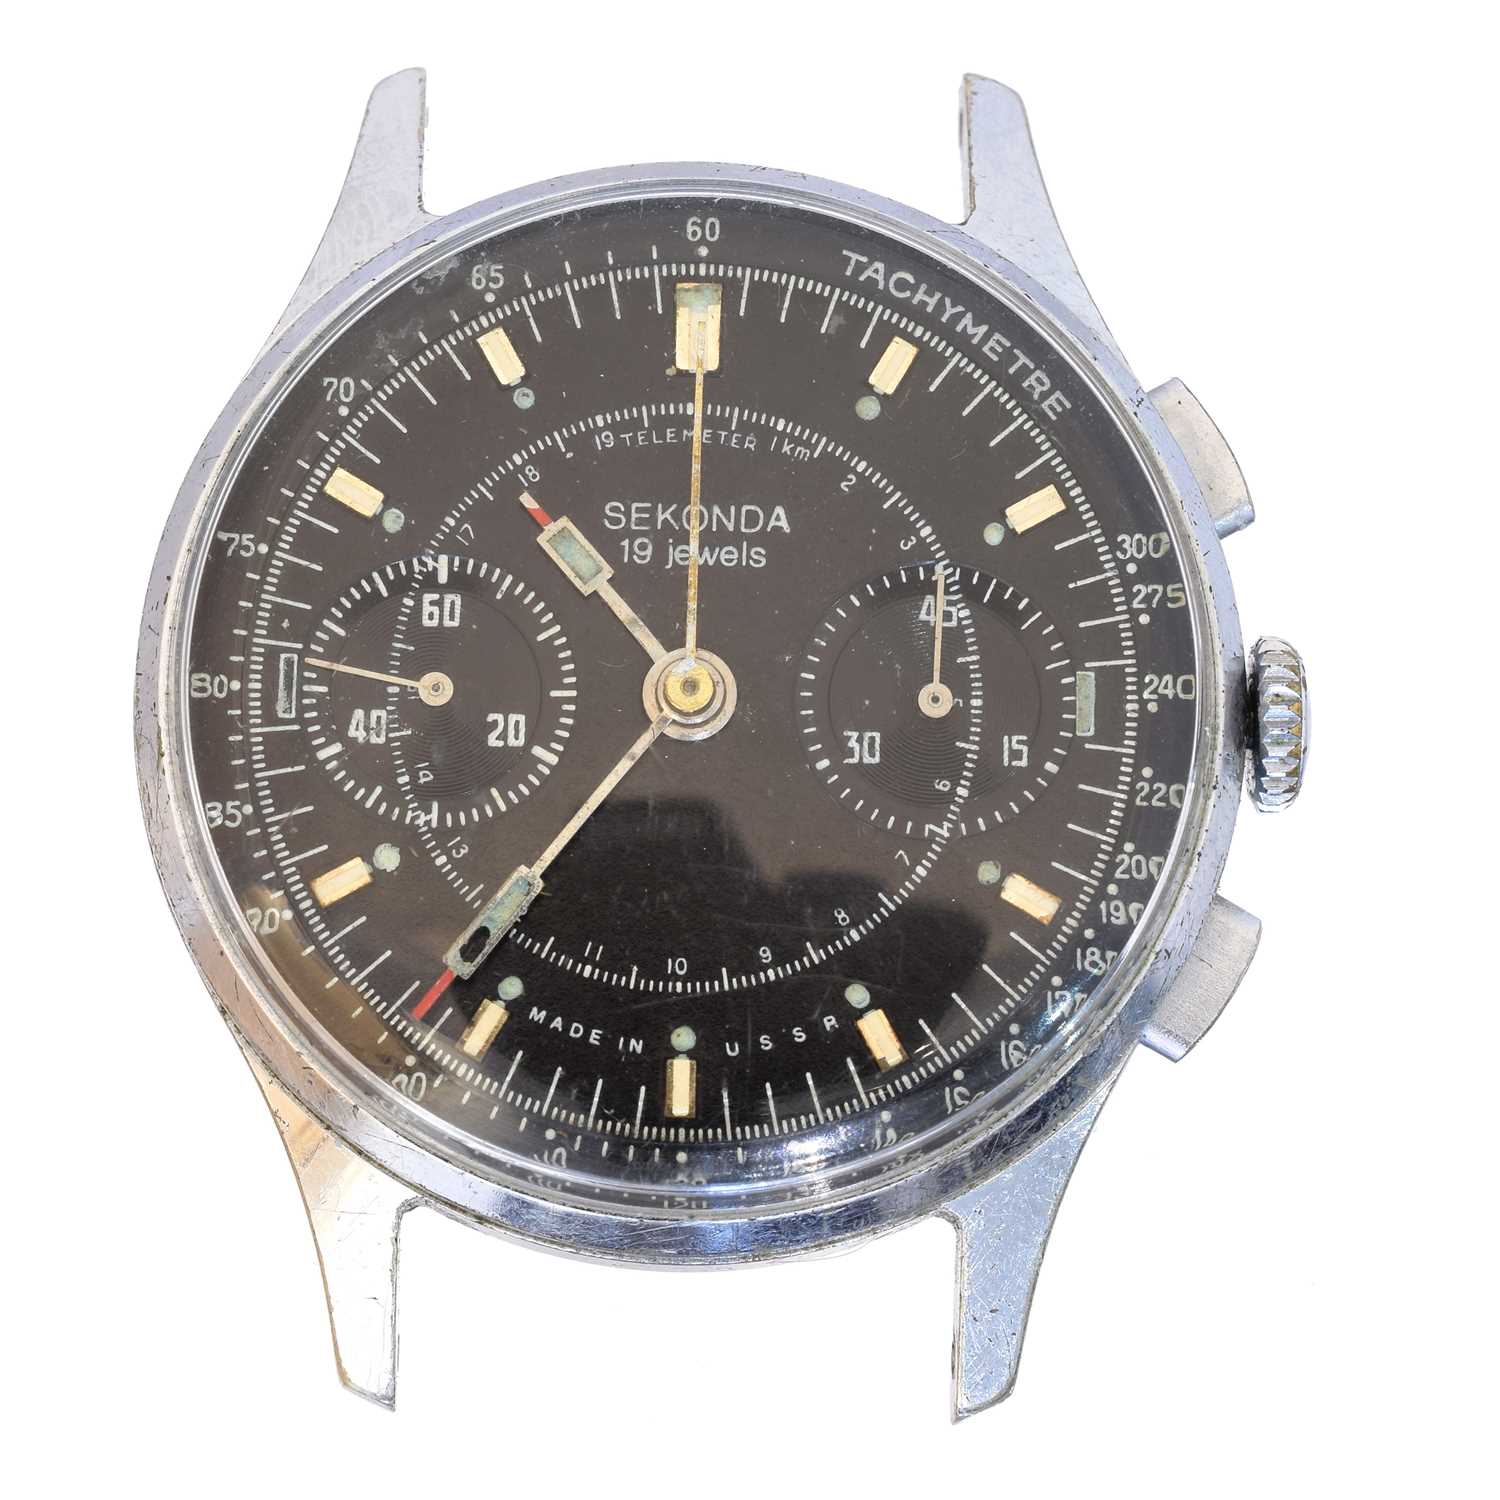 Lot A 1960s Sekonda USSR chronograph manual wind wristwatch